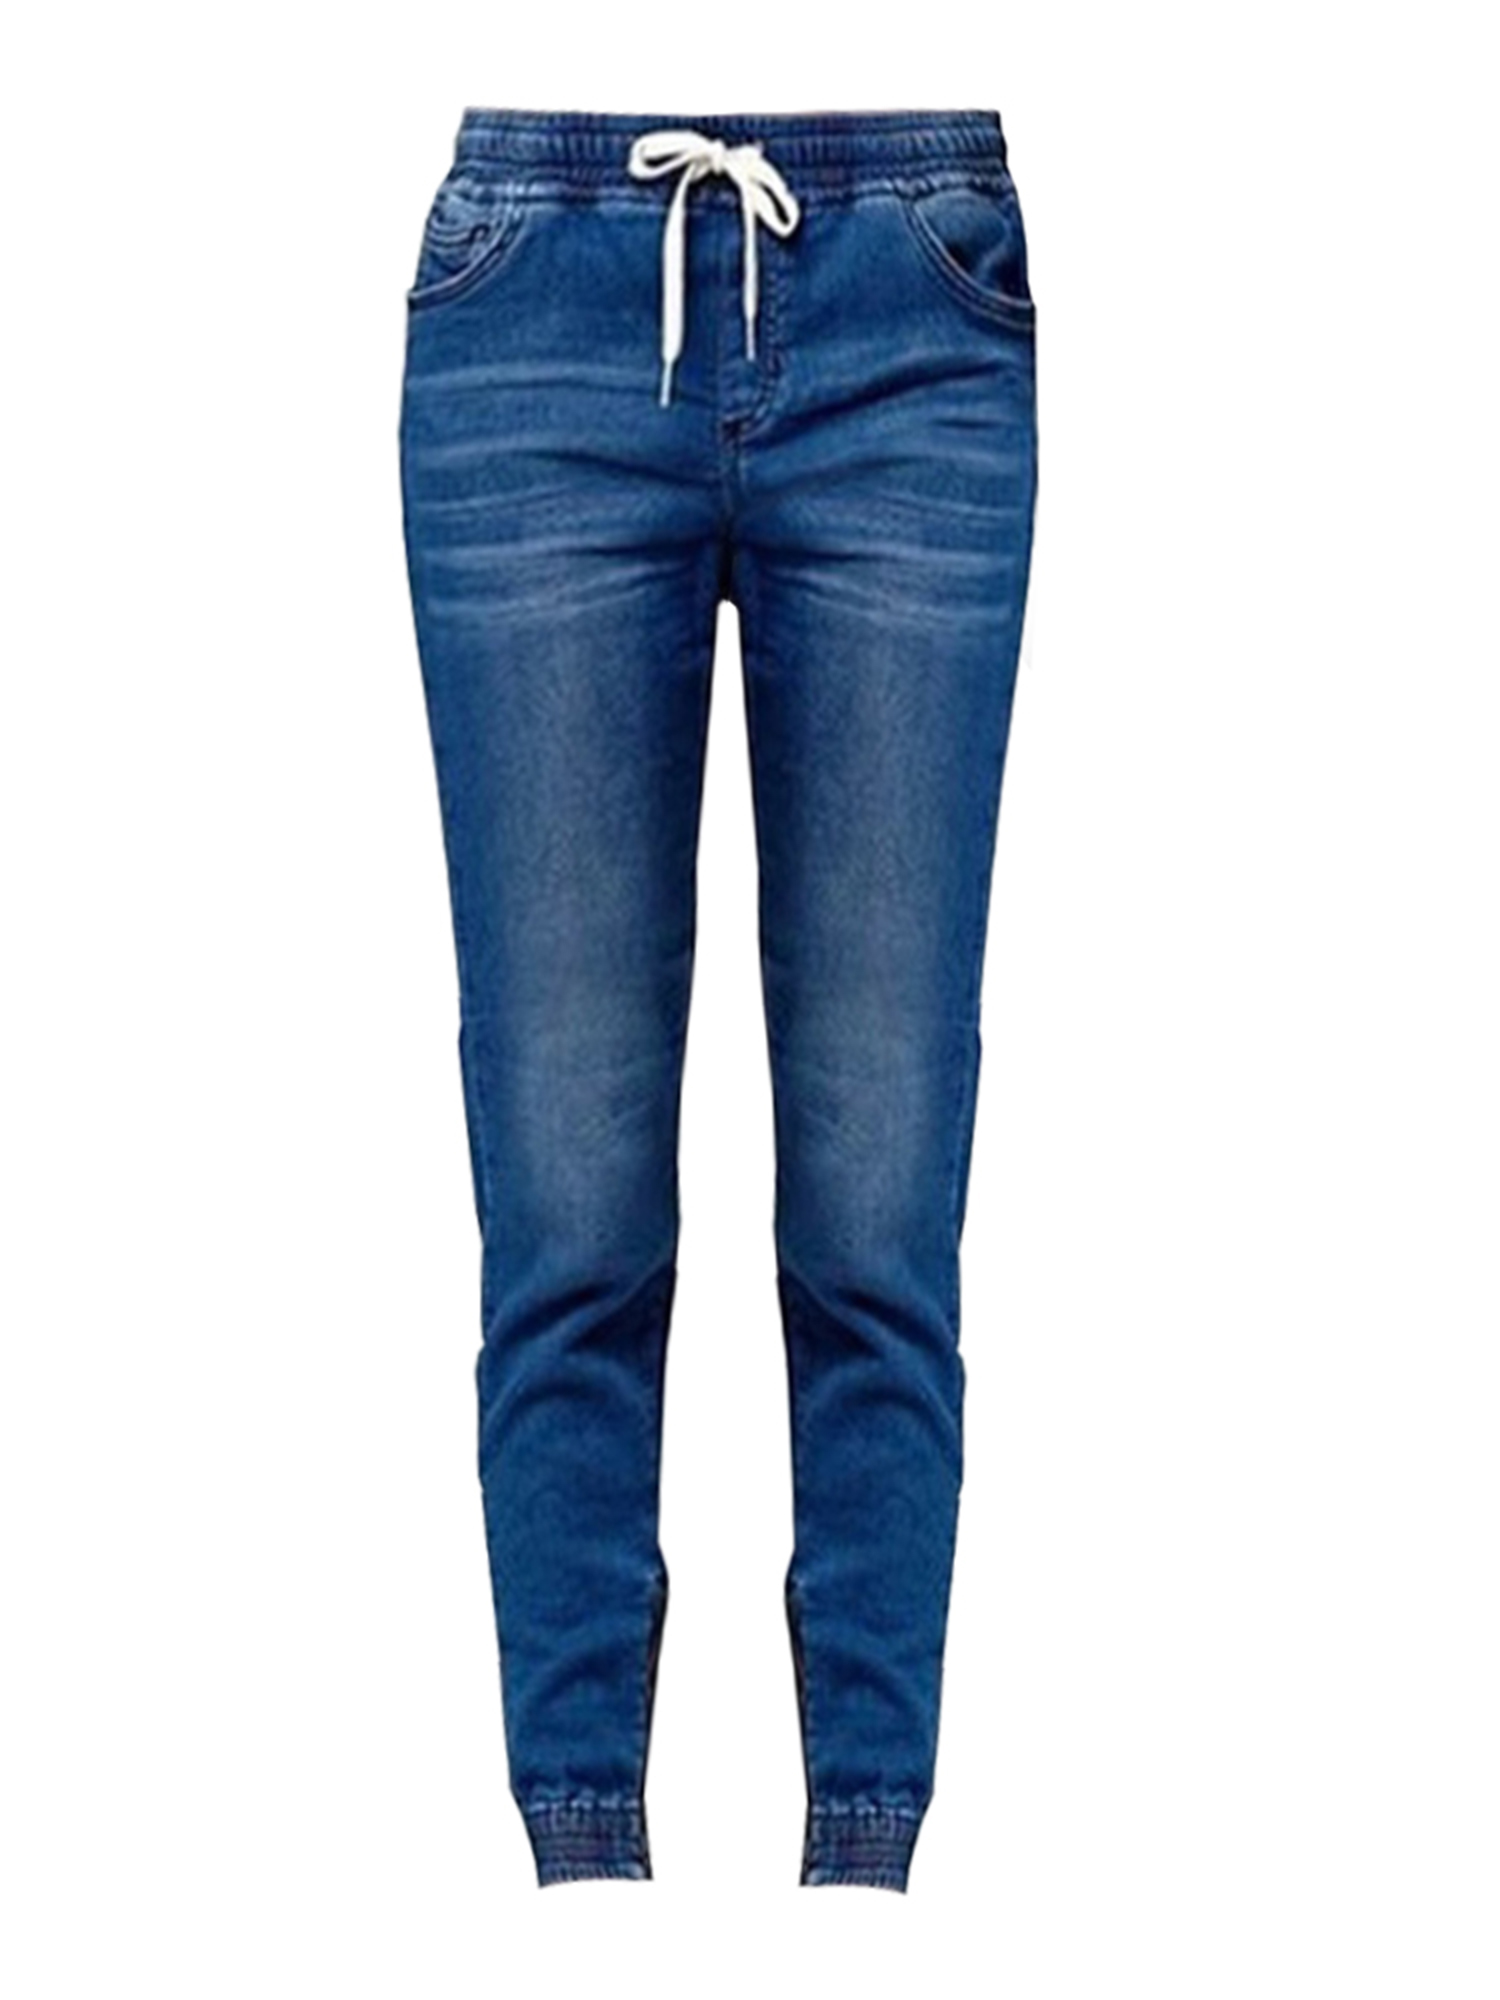 Plus Size Jeans for Women Mid Rise Slim Fit Joggers Denim Pants Casual Jeggings Drawstring Stretch Pants S-5XL Light Blue 2XL - image 4 of 4